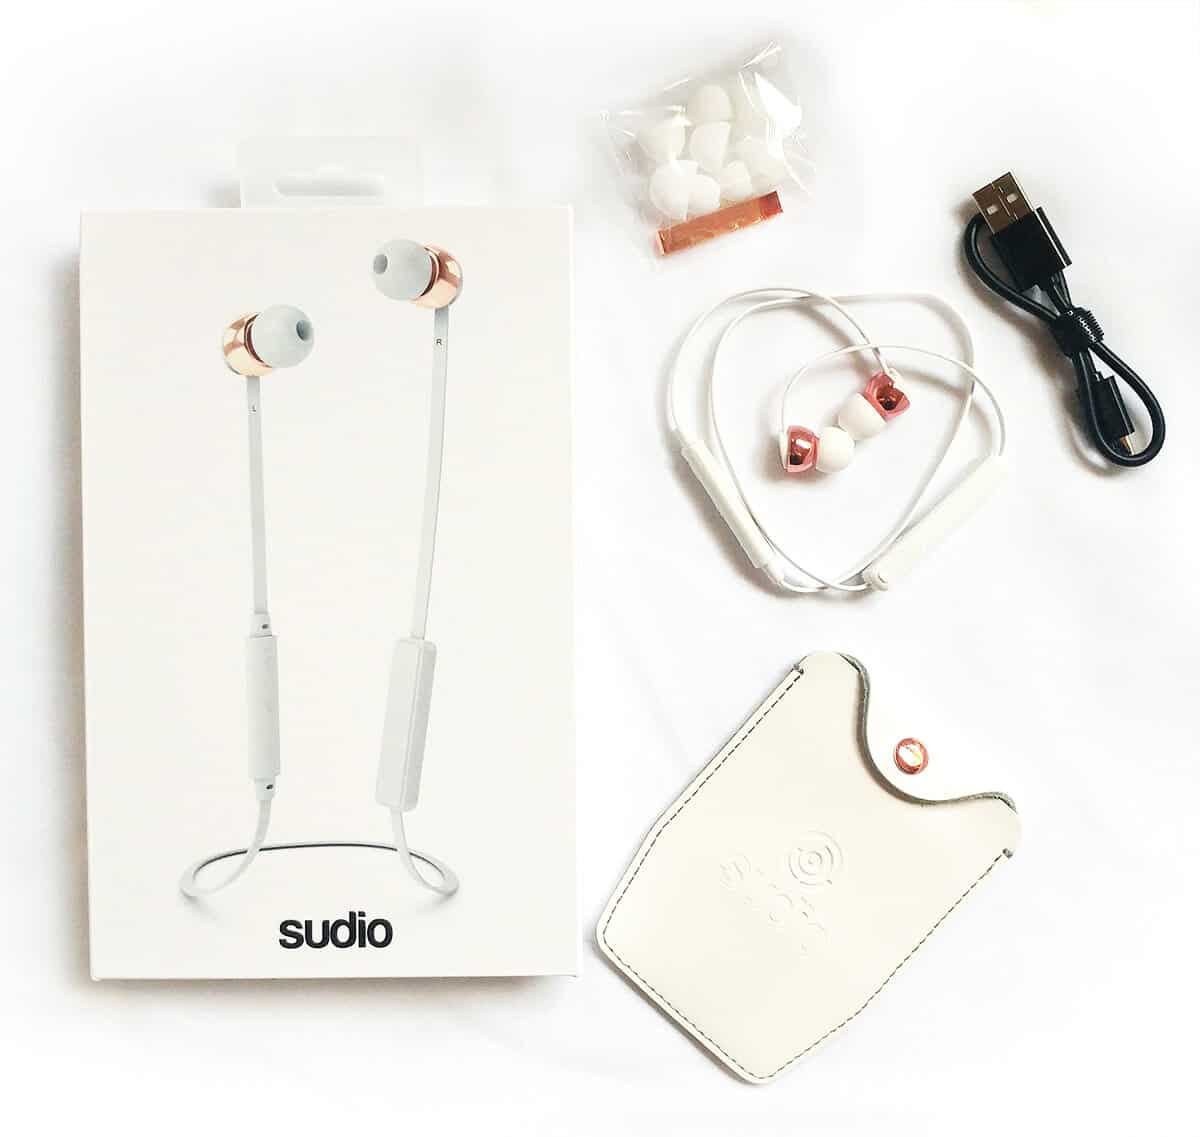 For the ENTERTAINER Geek: sudio Bluetooth wireless headphones